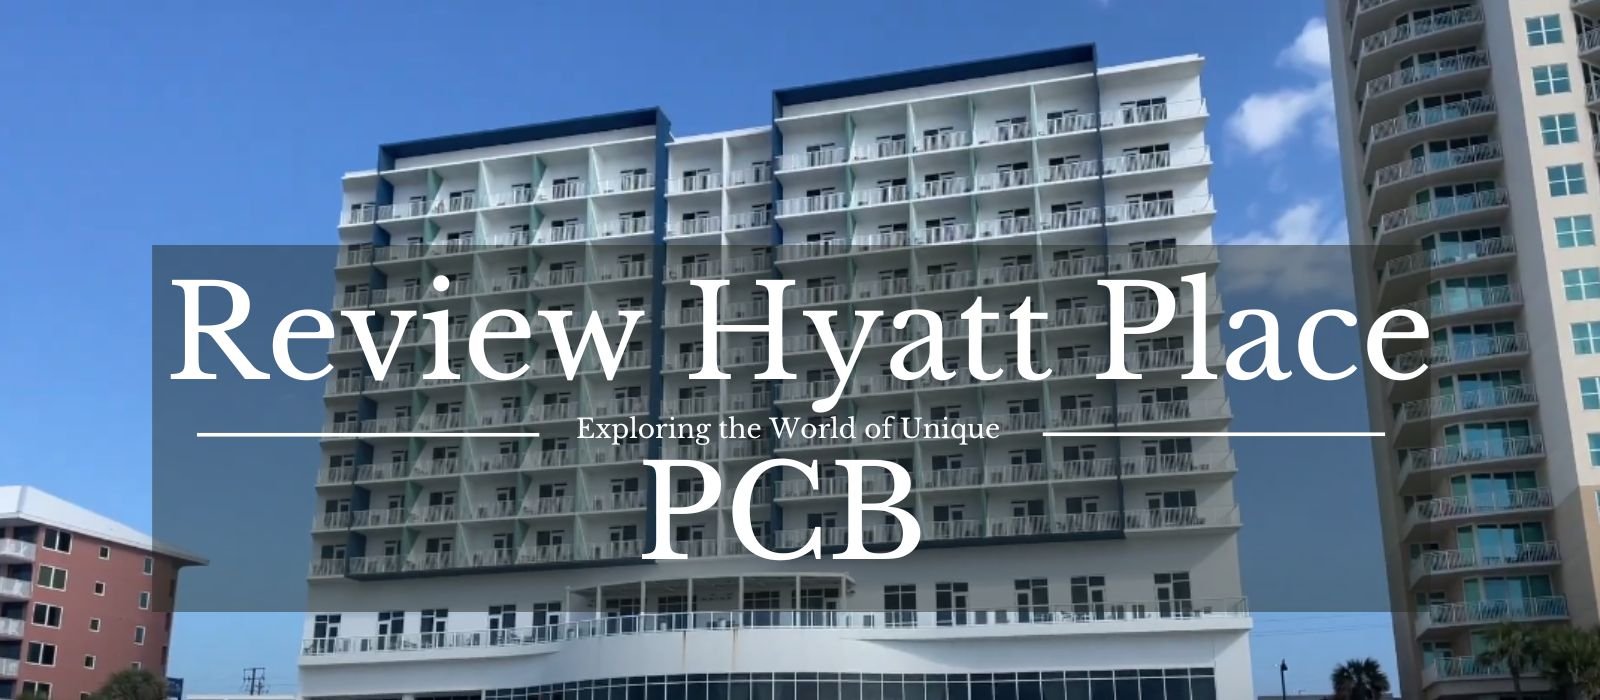 Review Hyatt Place PCB